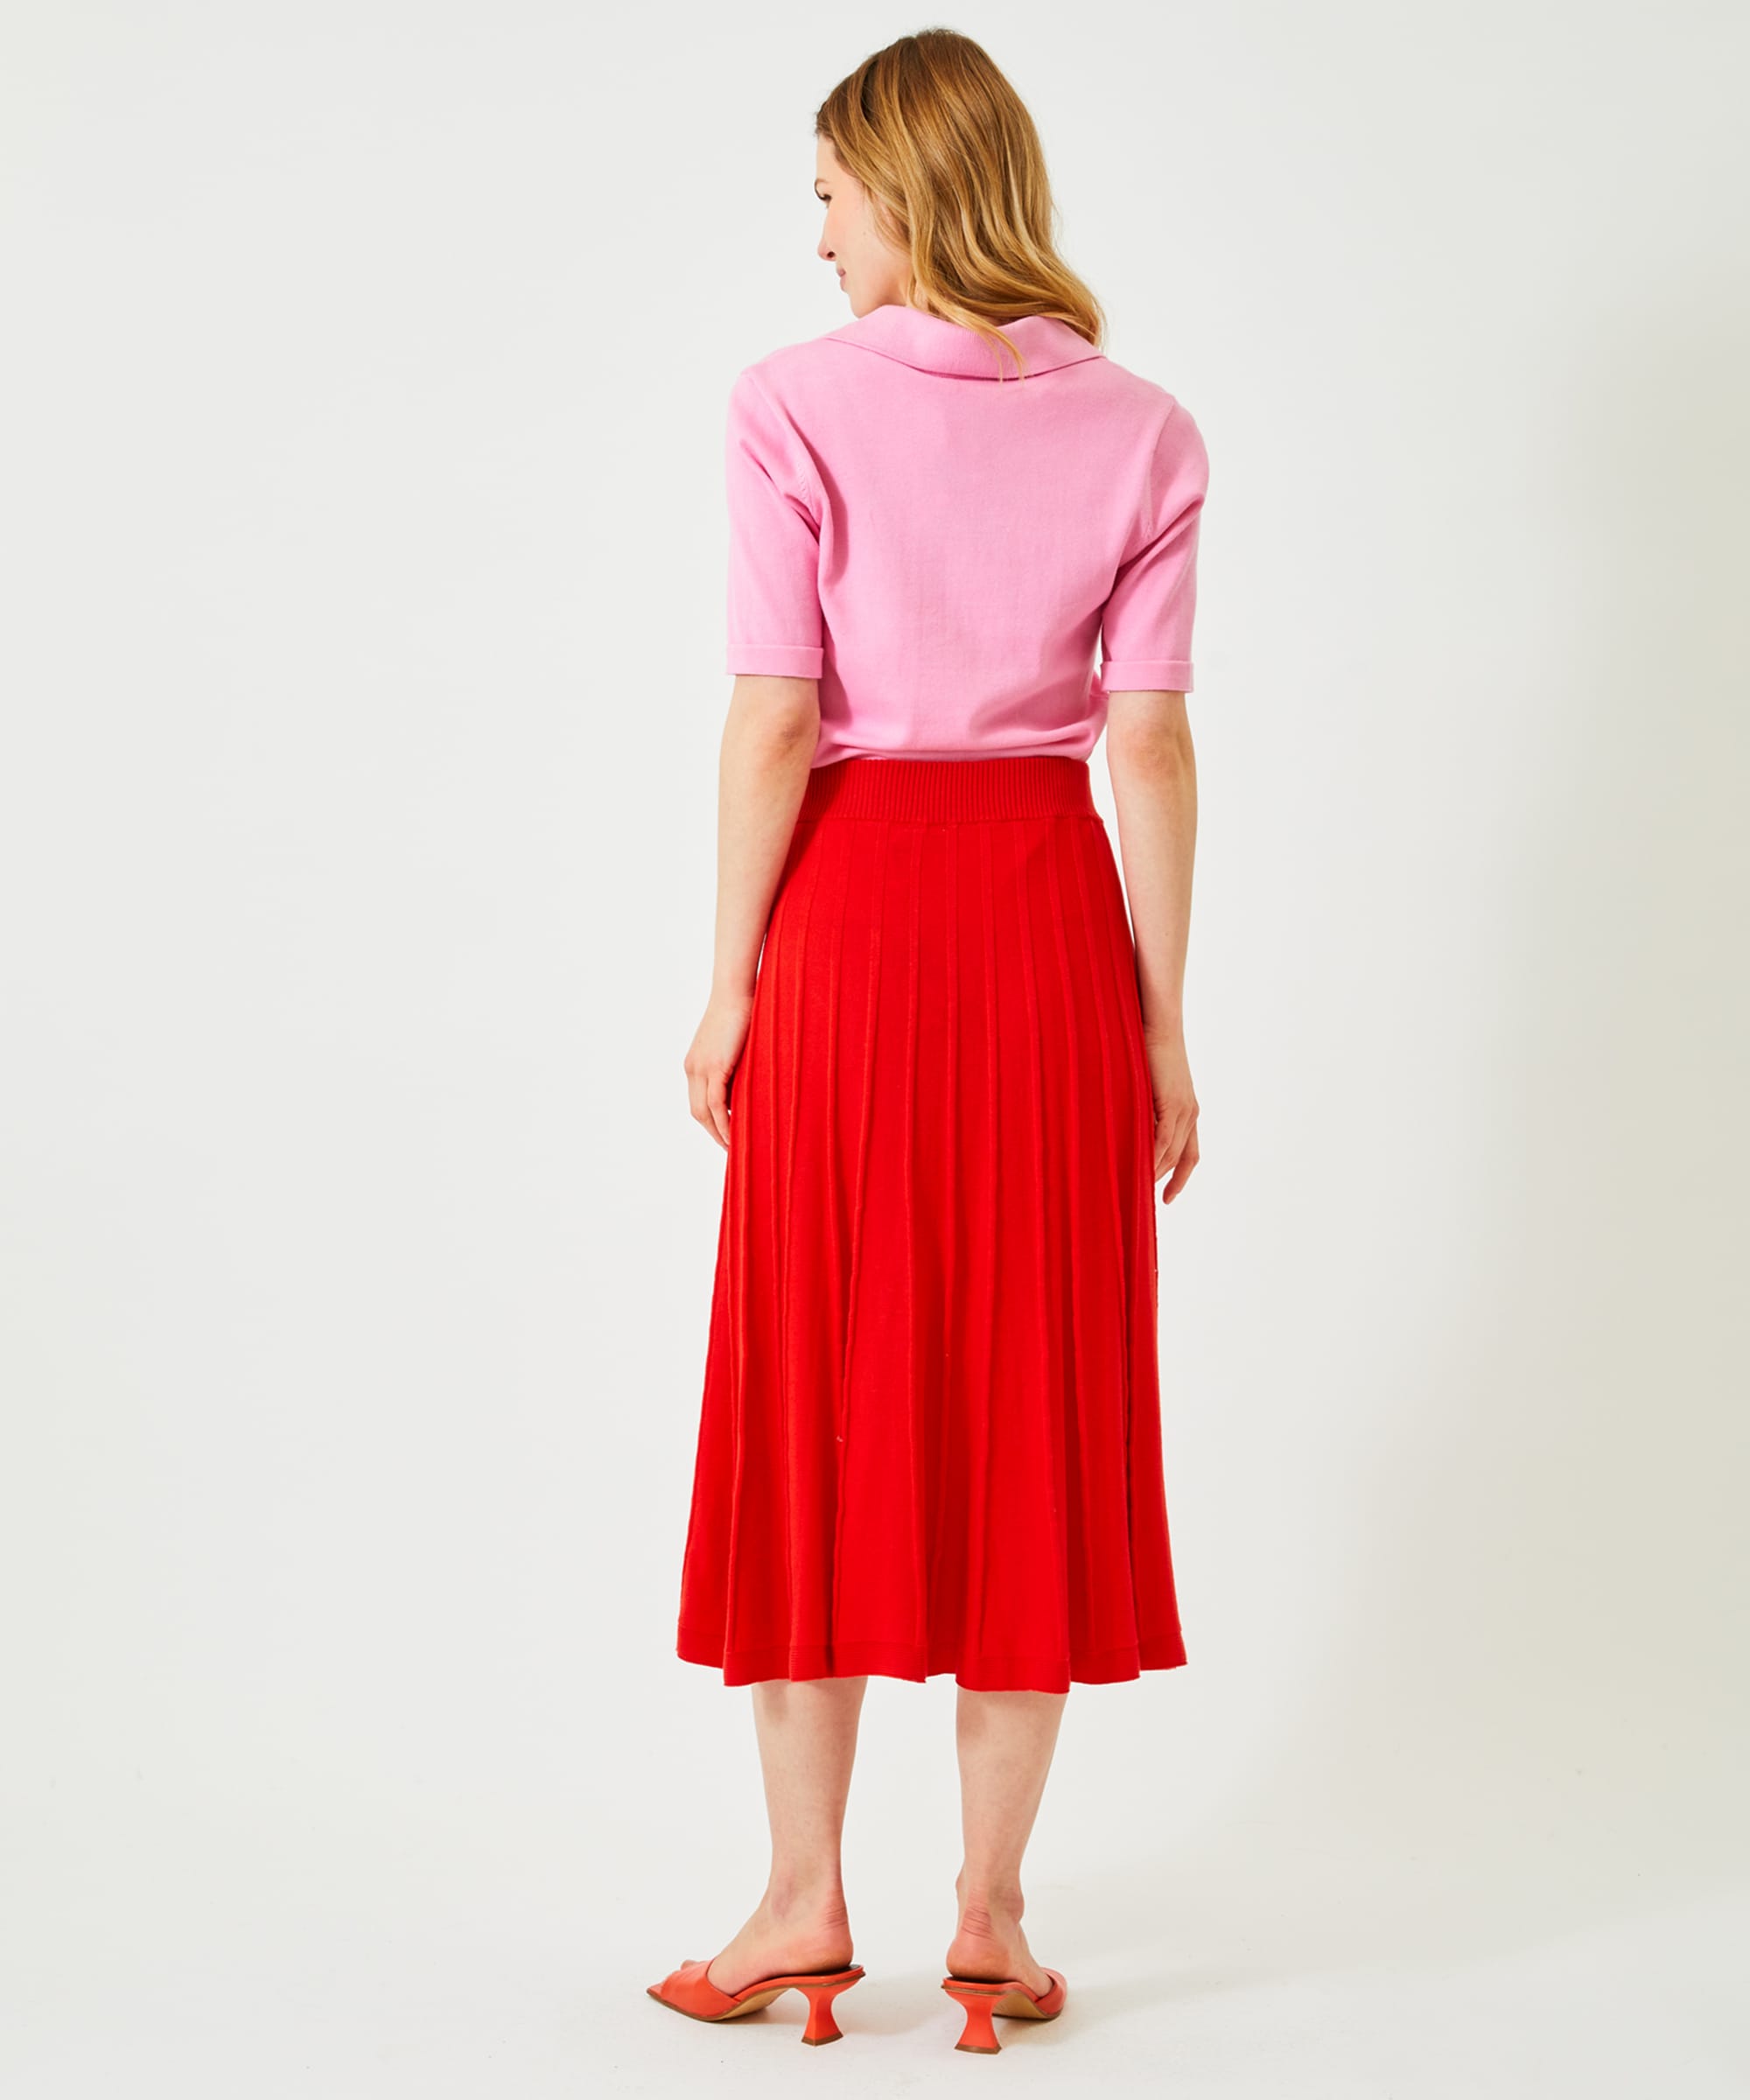 Klara Skirt Red